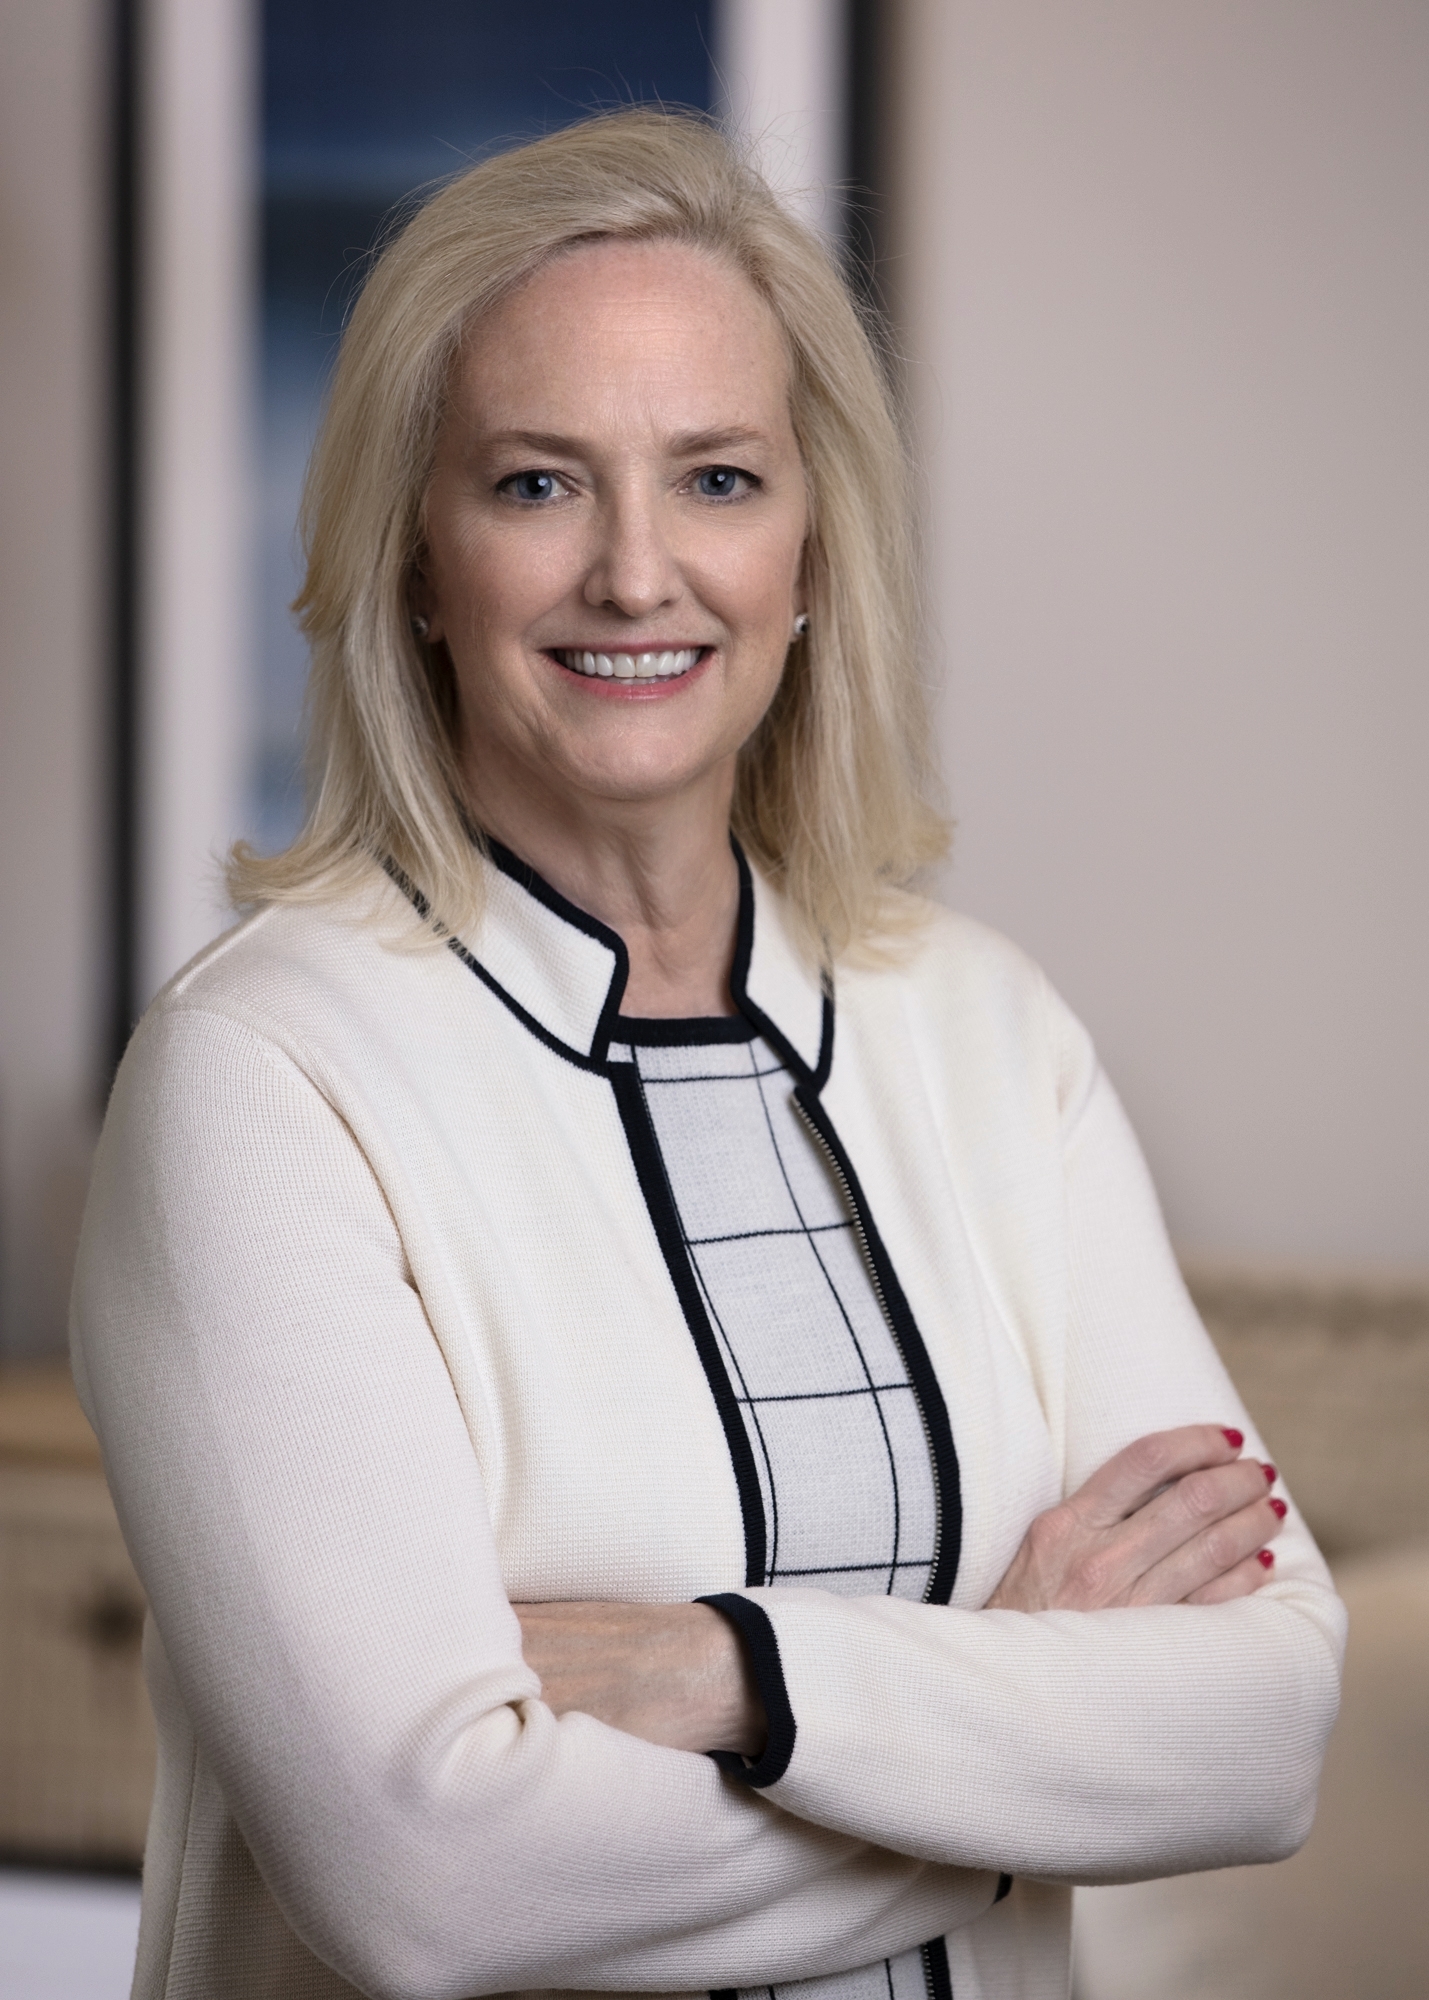 Bank of America Private Client Advisor Elizabeth Cahill